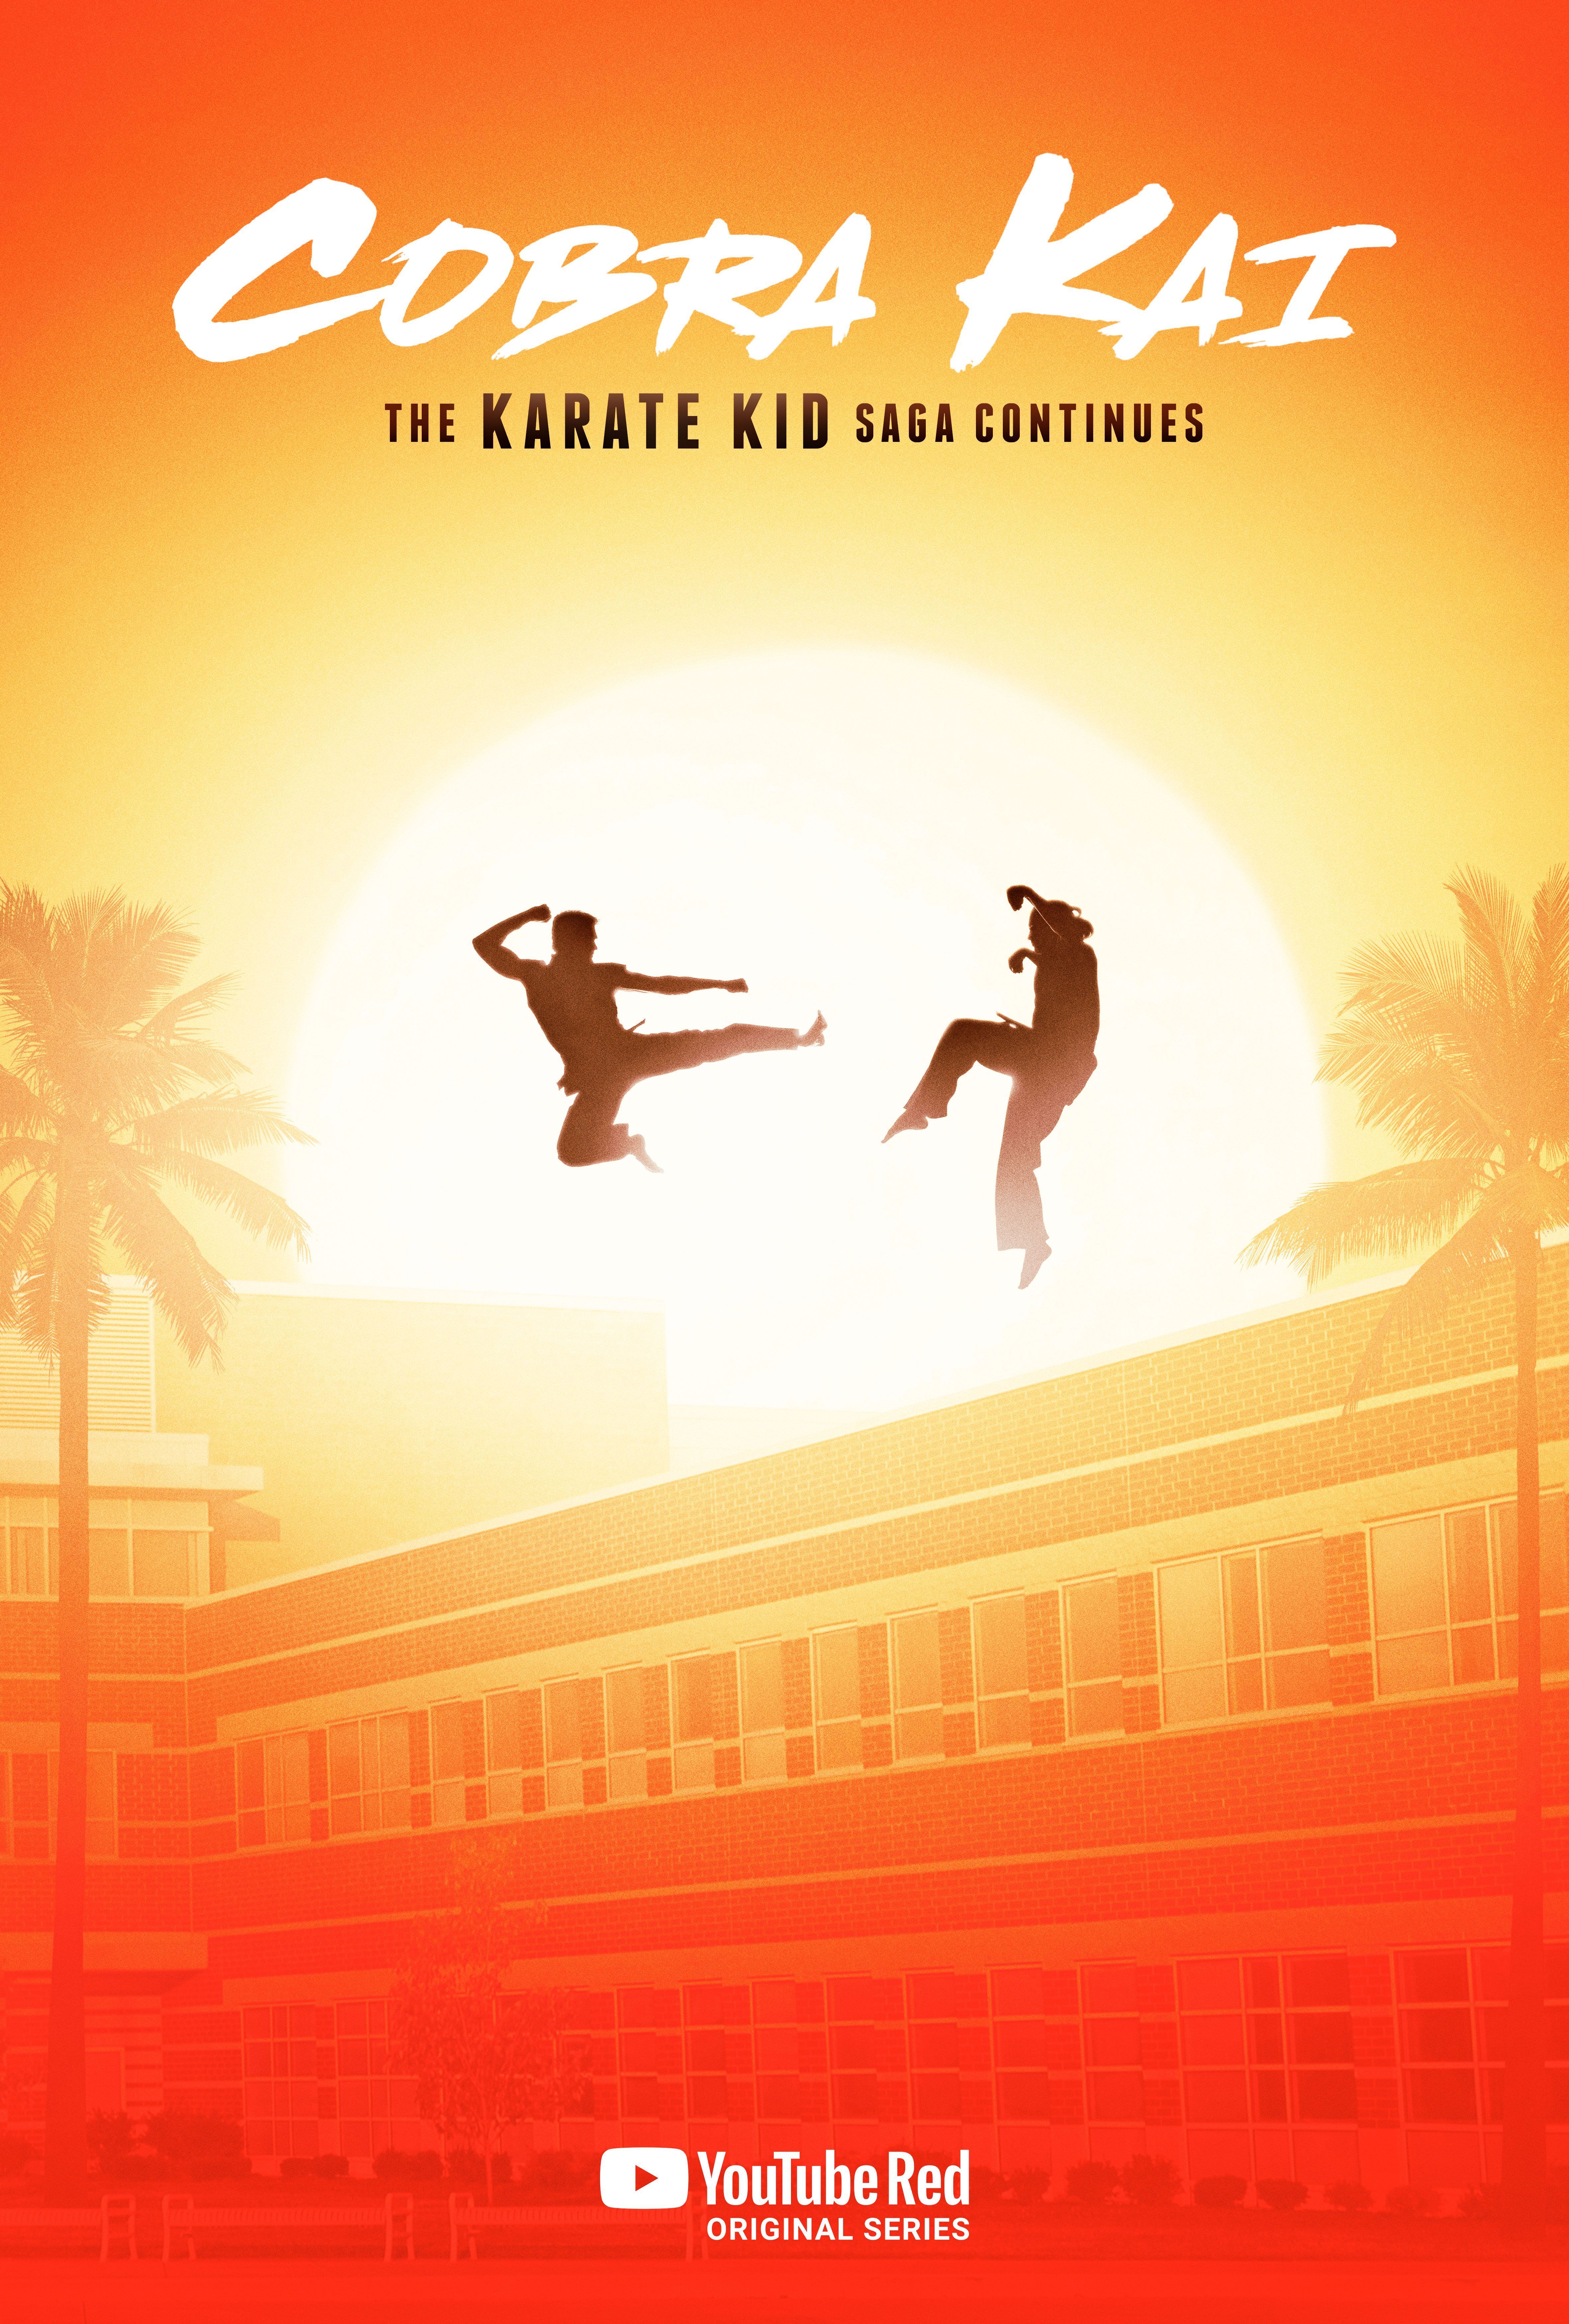 Cobra Kai Wallpaper. Karate kid movie, Karate kid, Cobra kai wallpaper